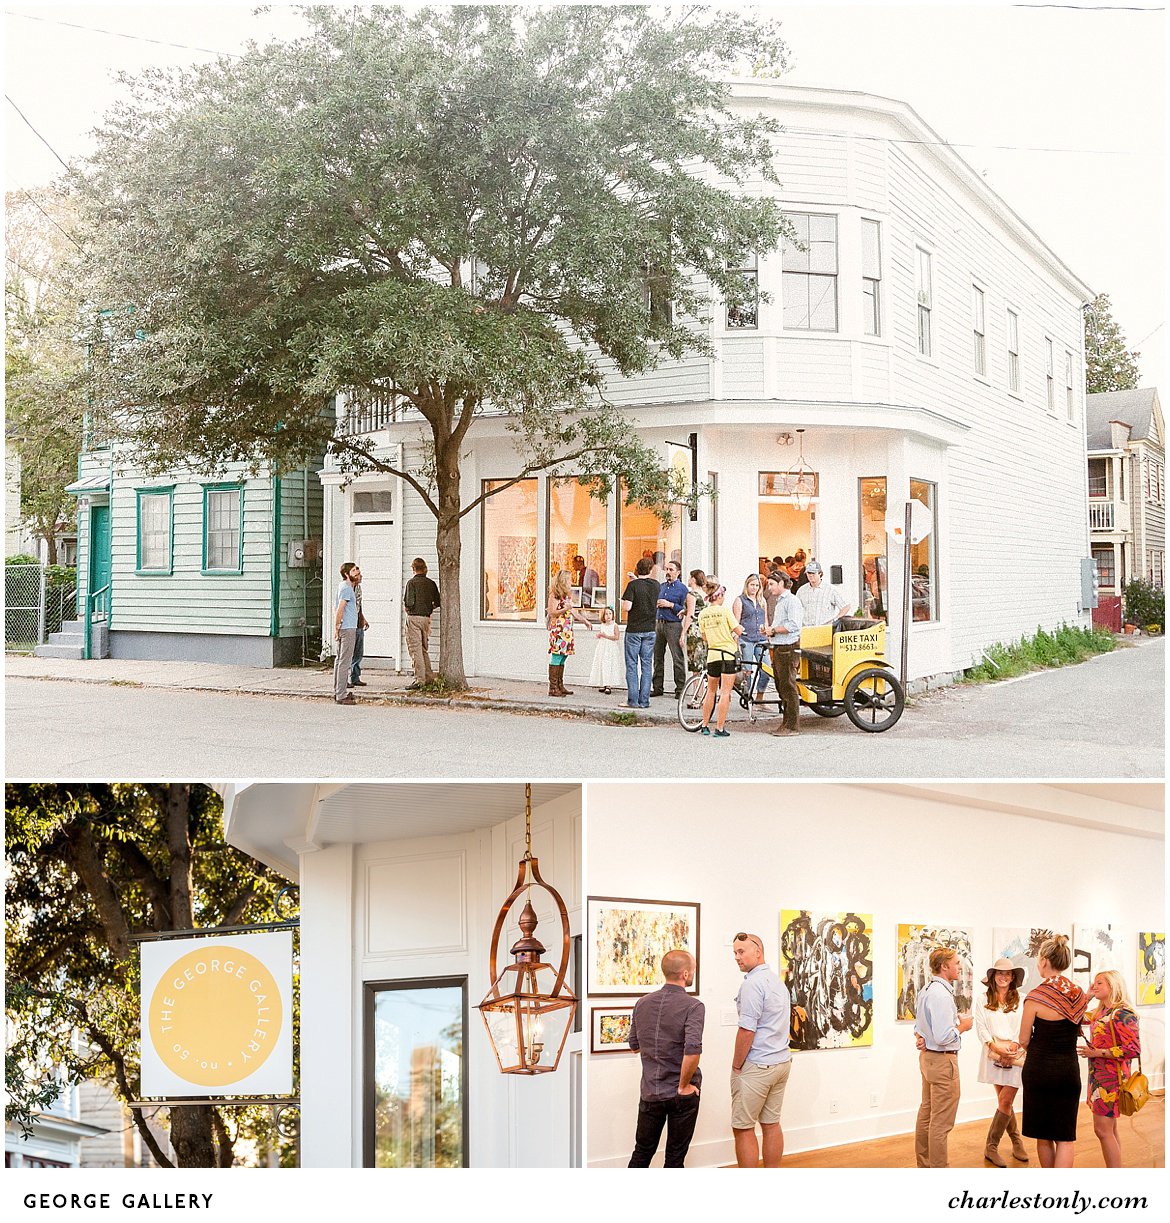 24 Art Galleries That Will Leave You Feeling Inspired in Charleston Explore Charleston Blog